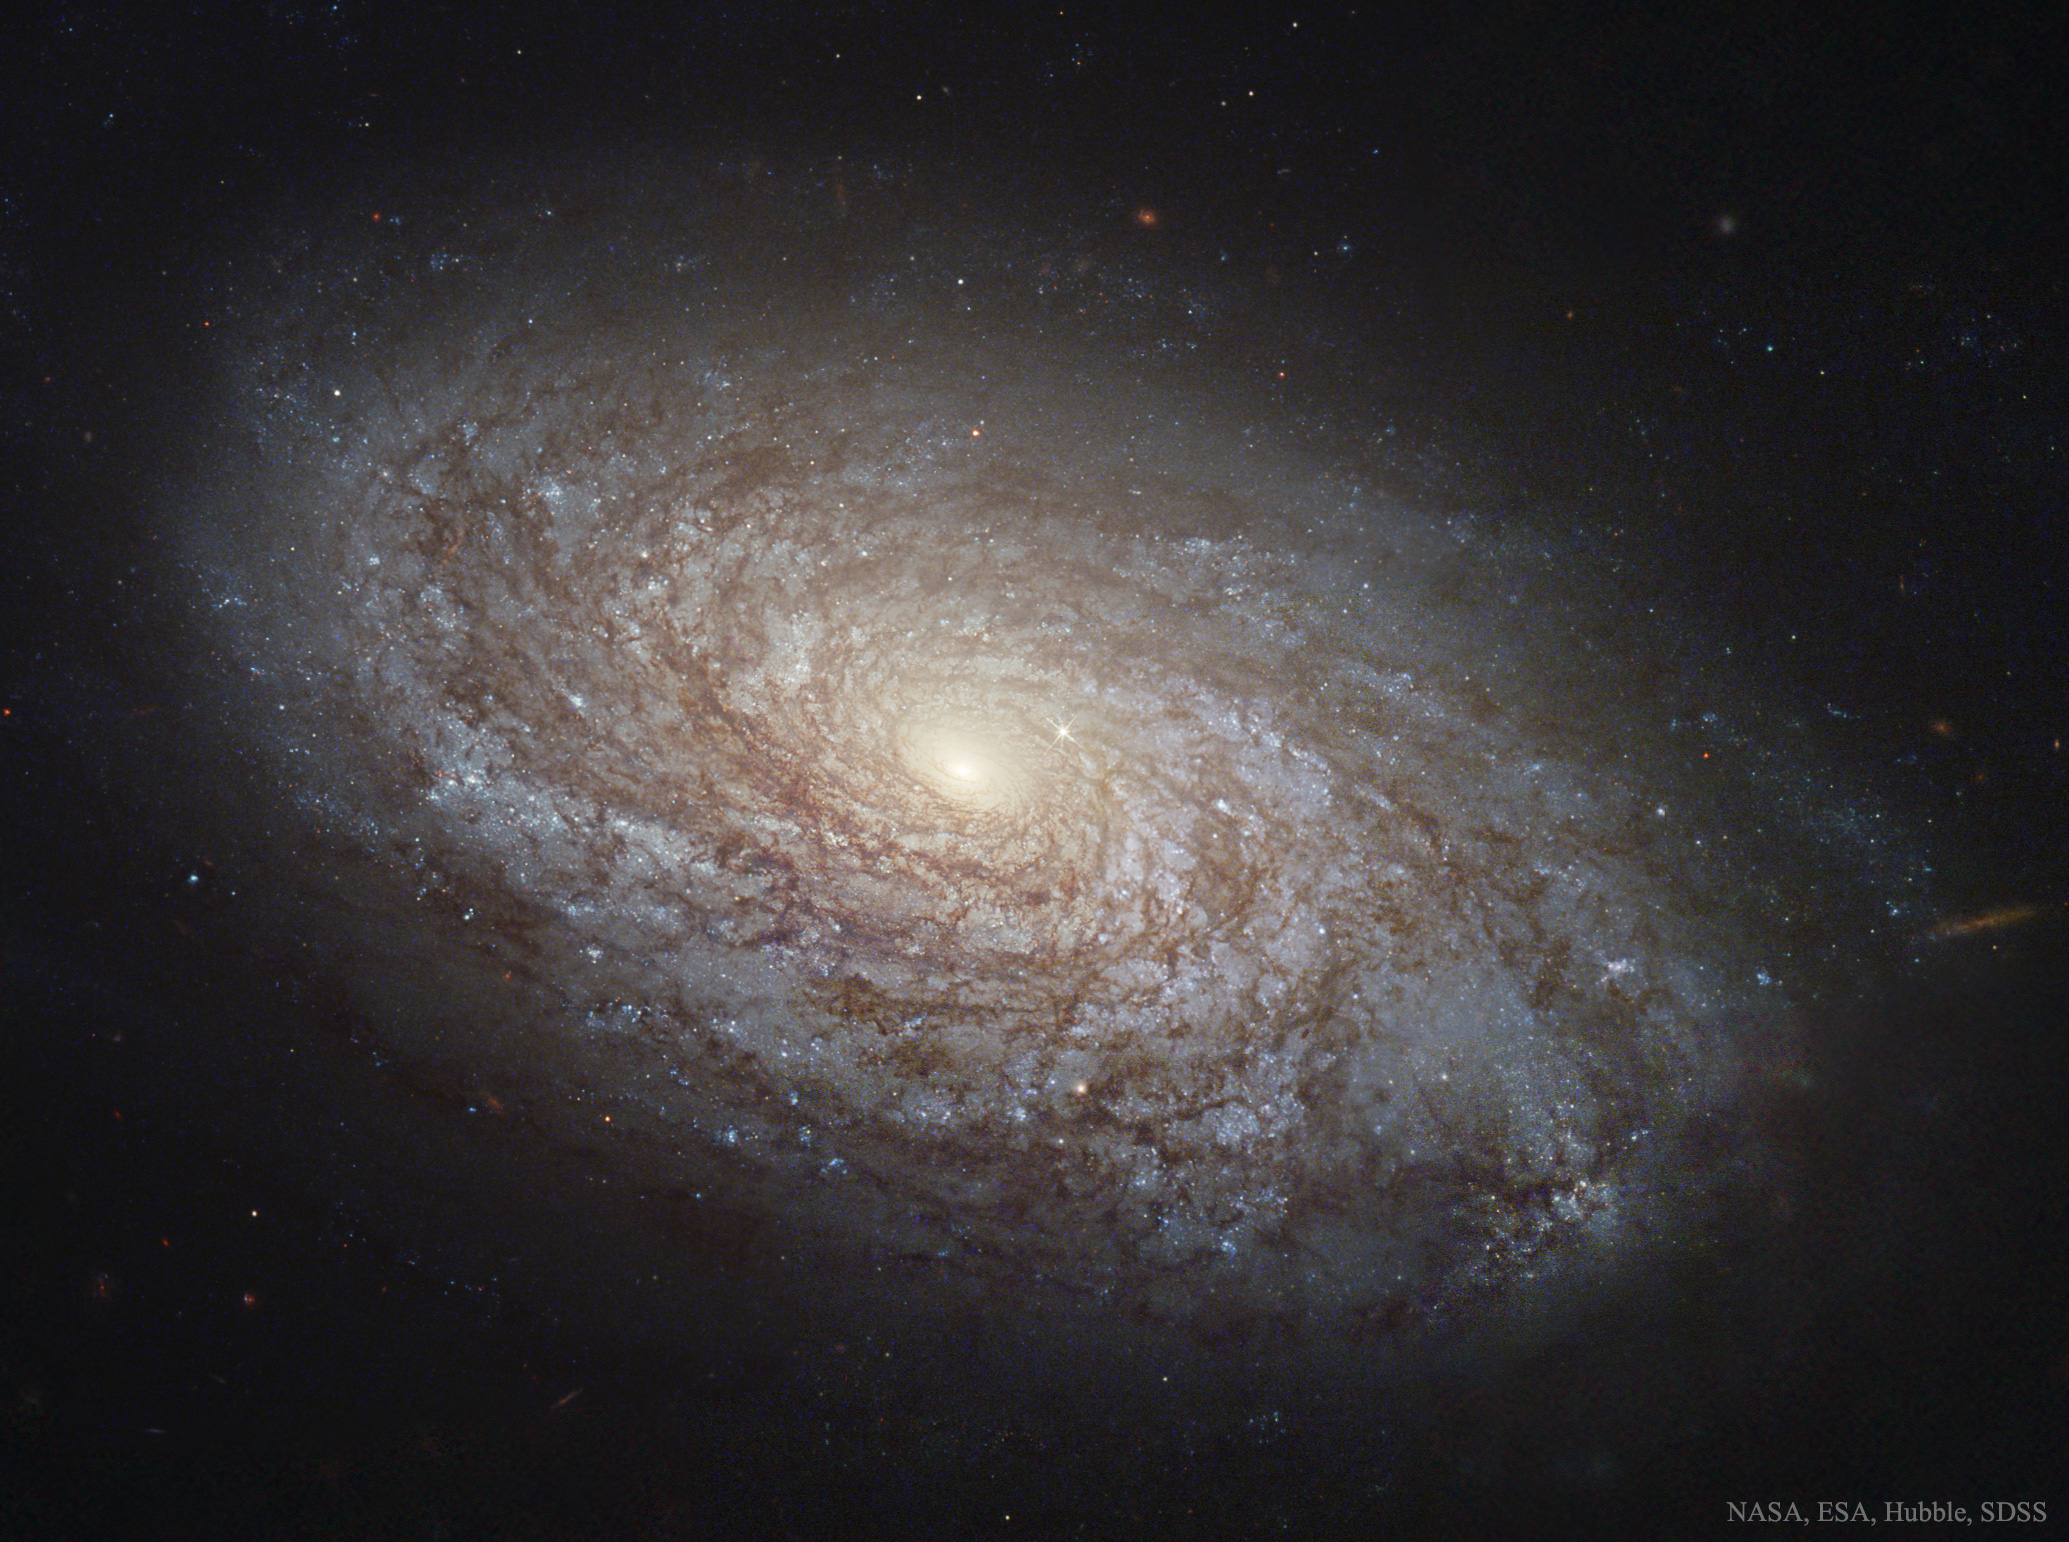 APOD: 2016 November 20 - NGC 4414: A Flocculent Spiral Galaxy